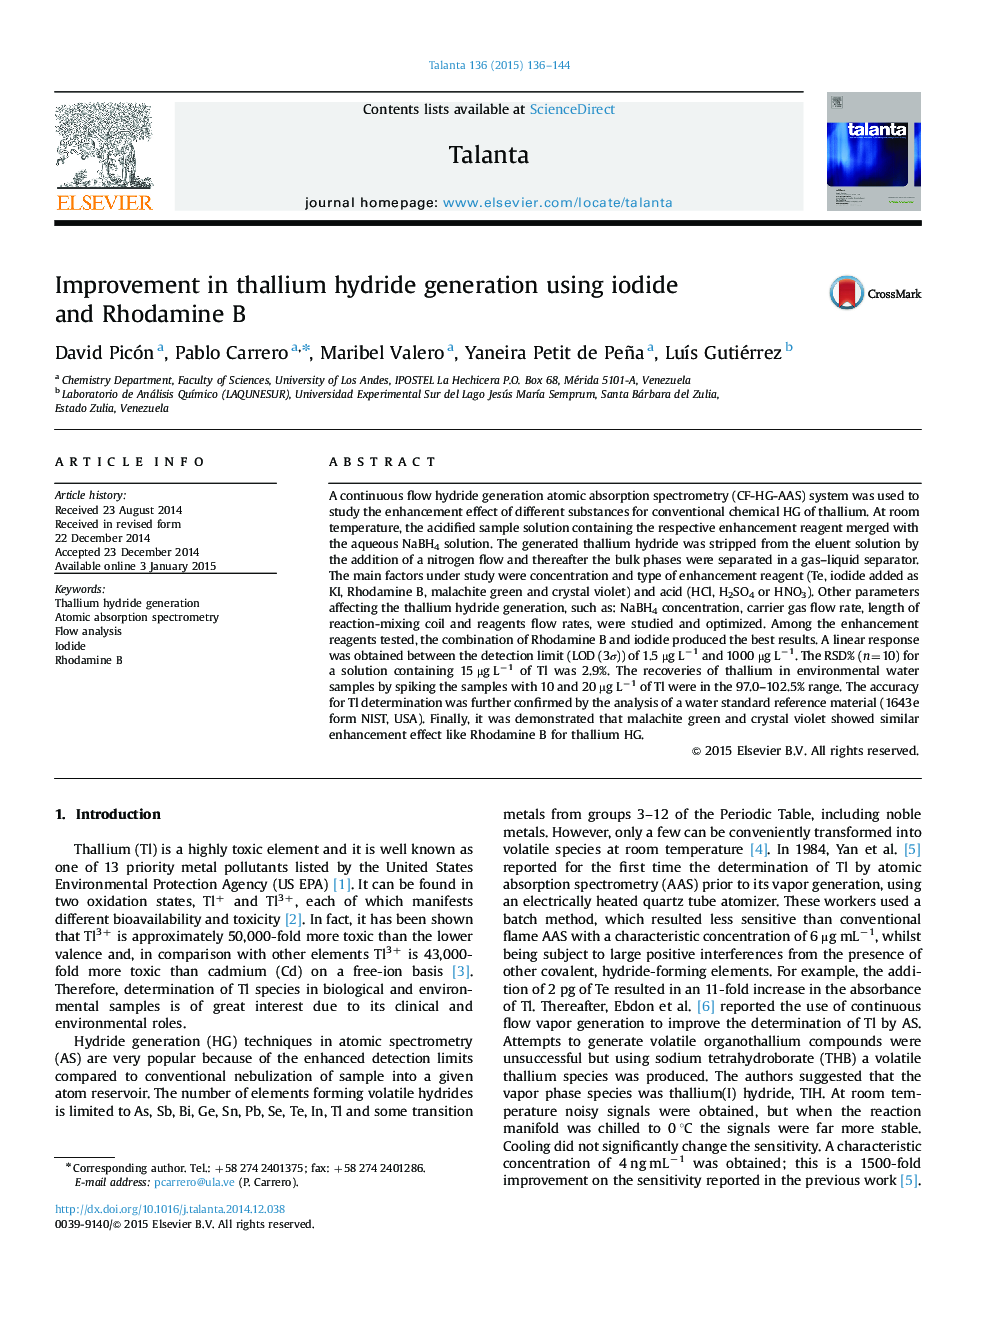 Improvement in thallium hydride generation using iodide and Rhodamine B